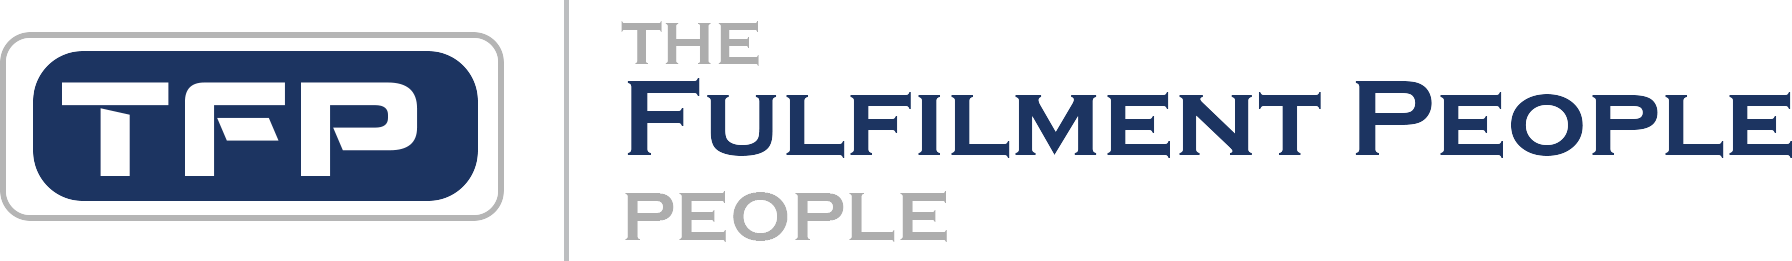 Fulfilment People Logo Color